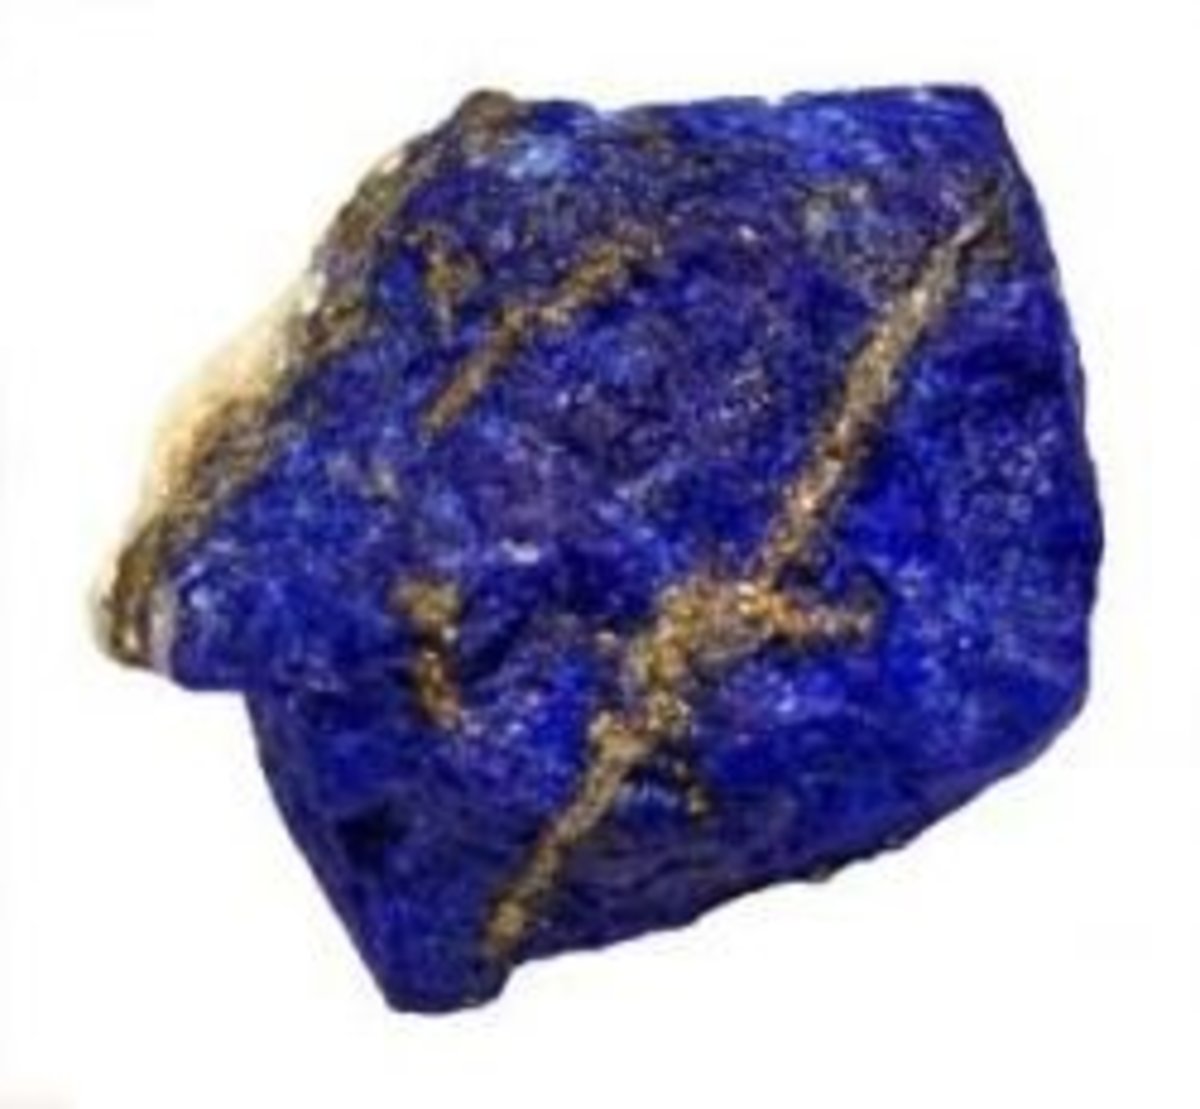 Raw Lapis Lazuli specimen